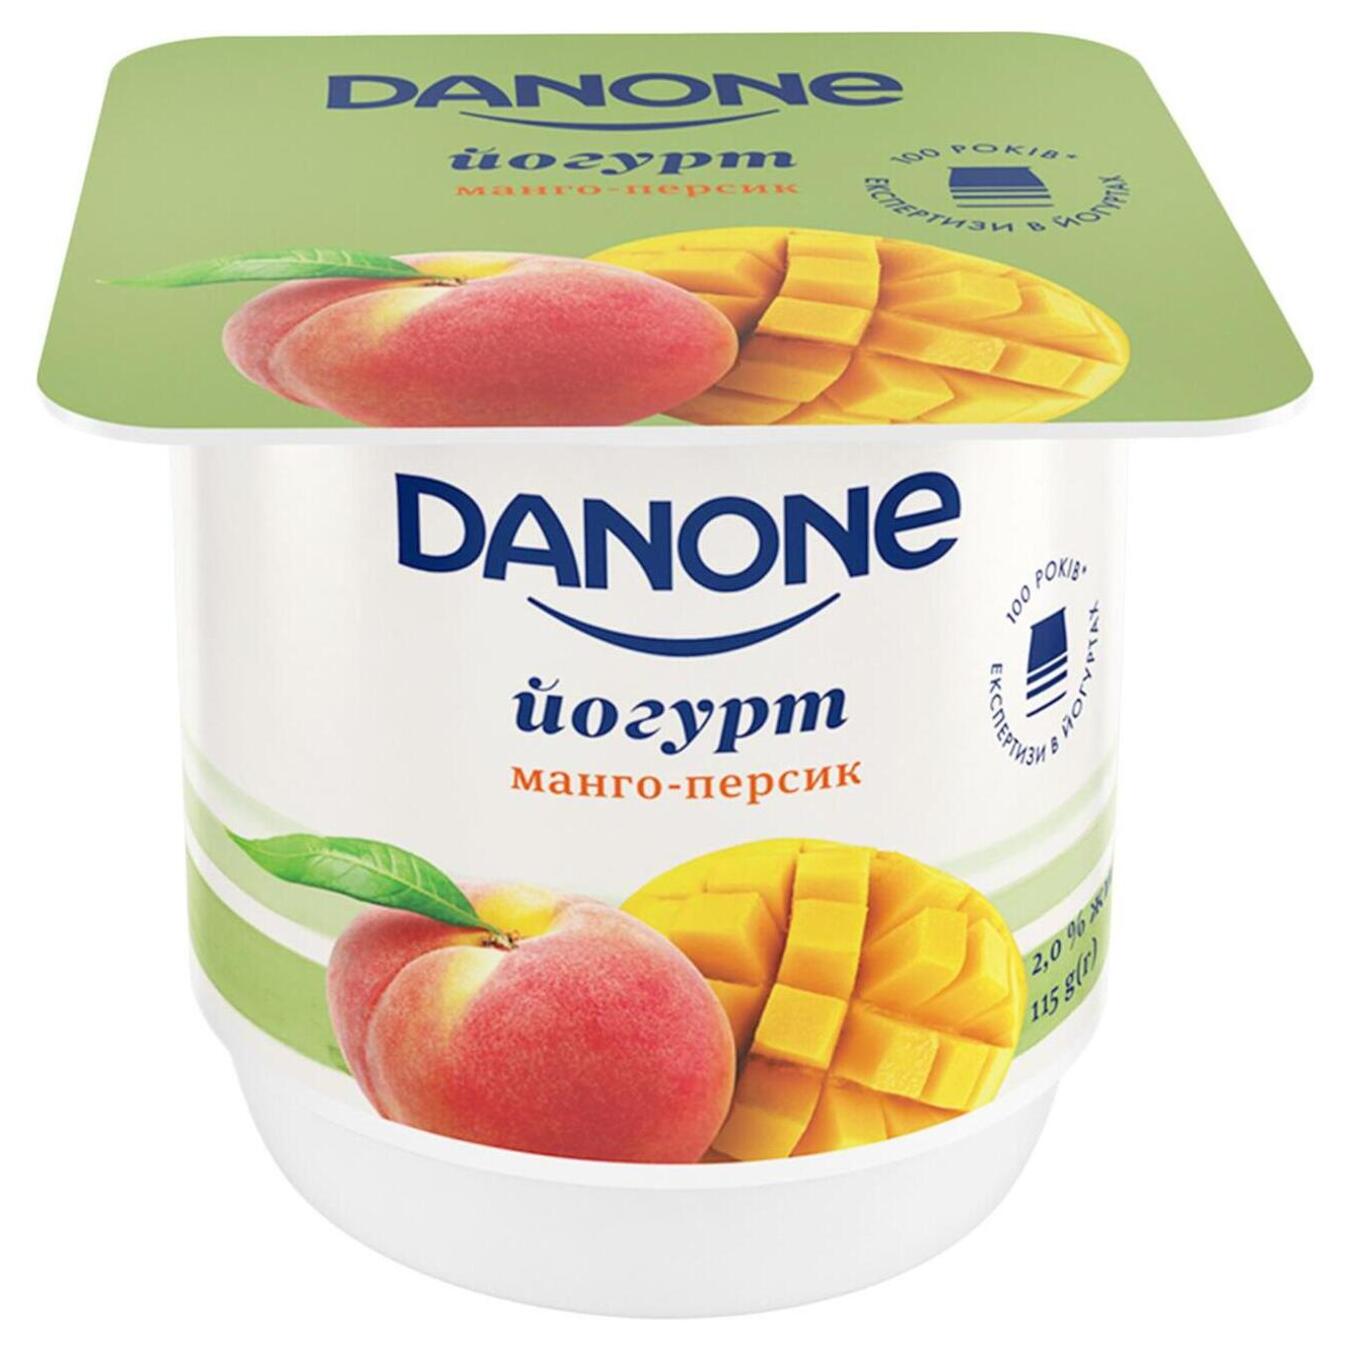 Йогурт Danone манго-персик стакан 2% 115г